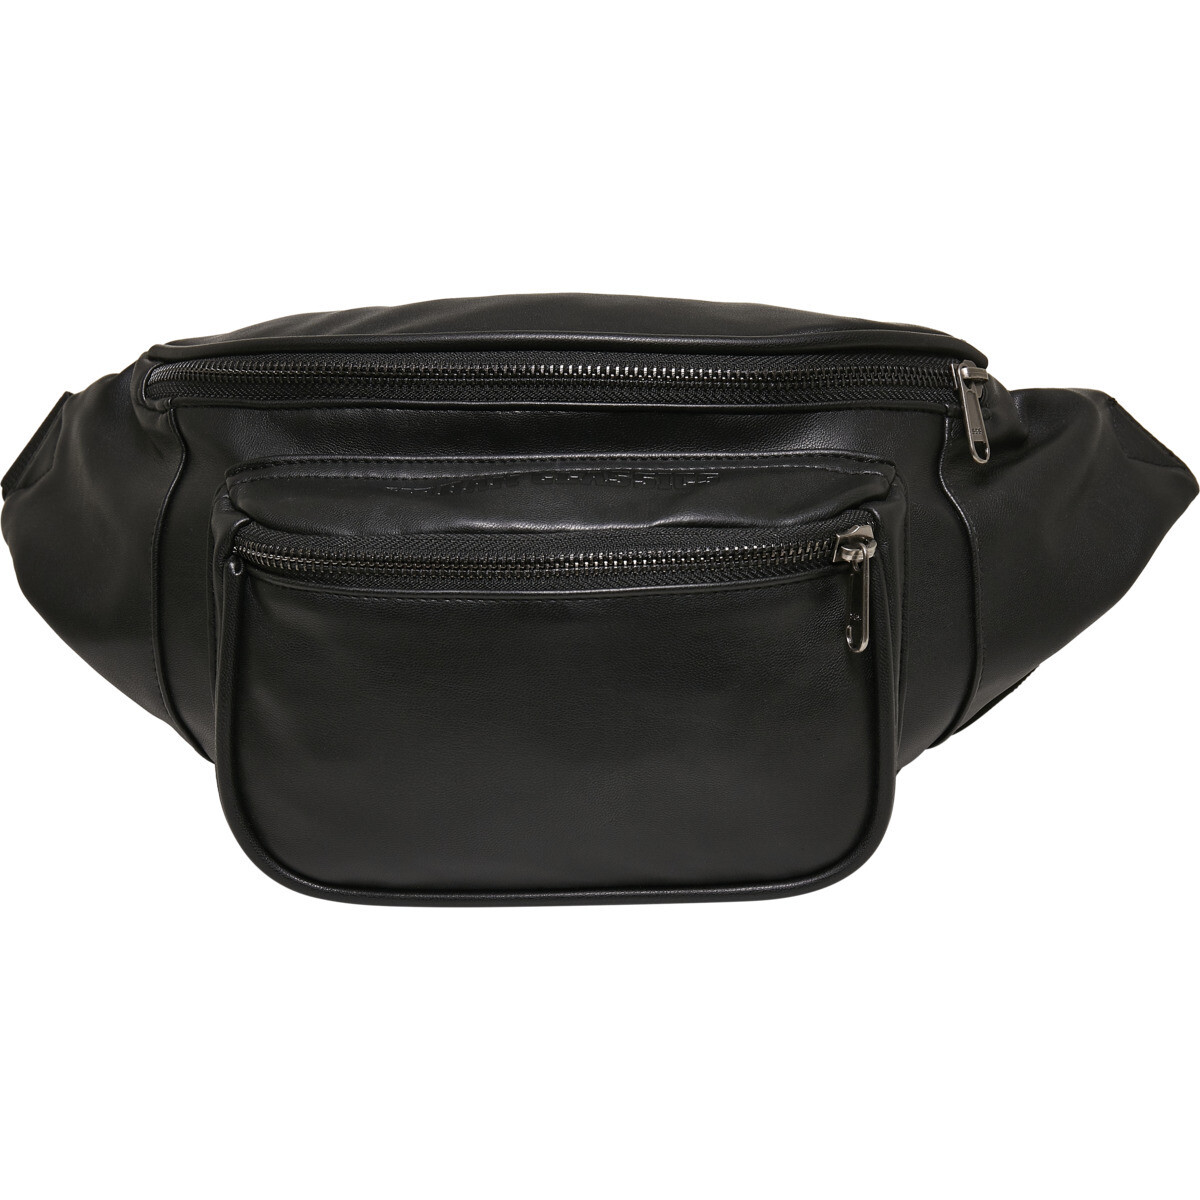 Imitation Leather Double Zip Shoulder Bag